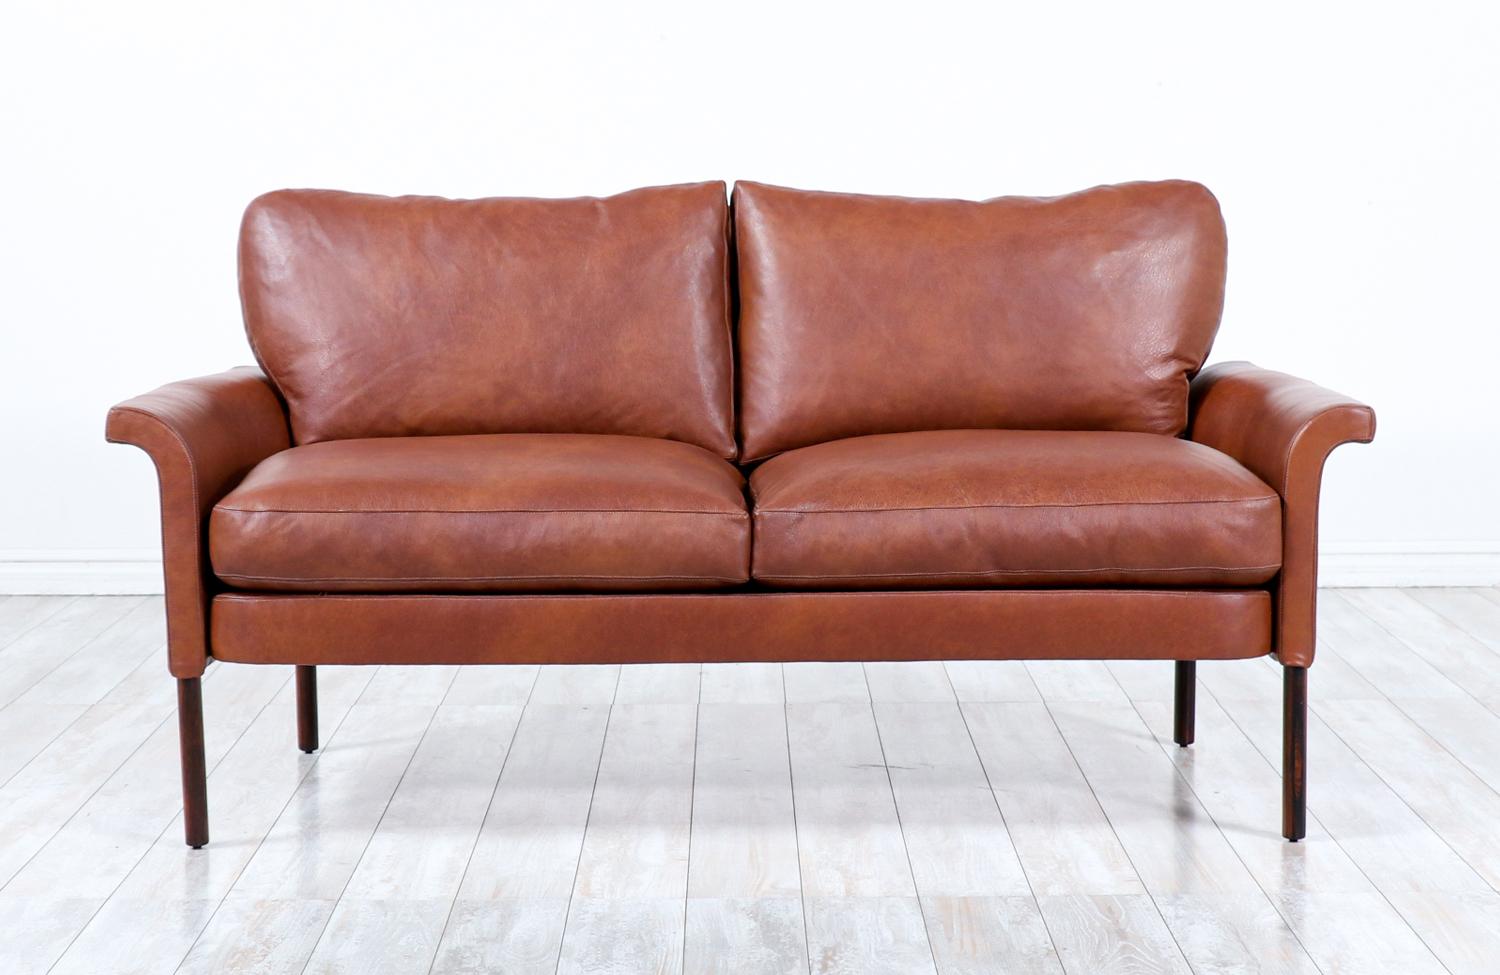 Hans Olsen Cognac leather & rosewood love seat sofa.